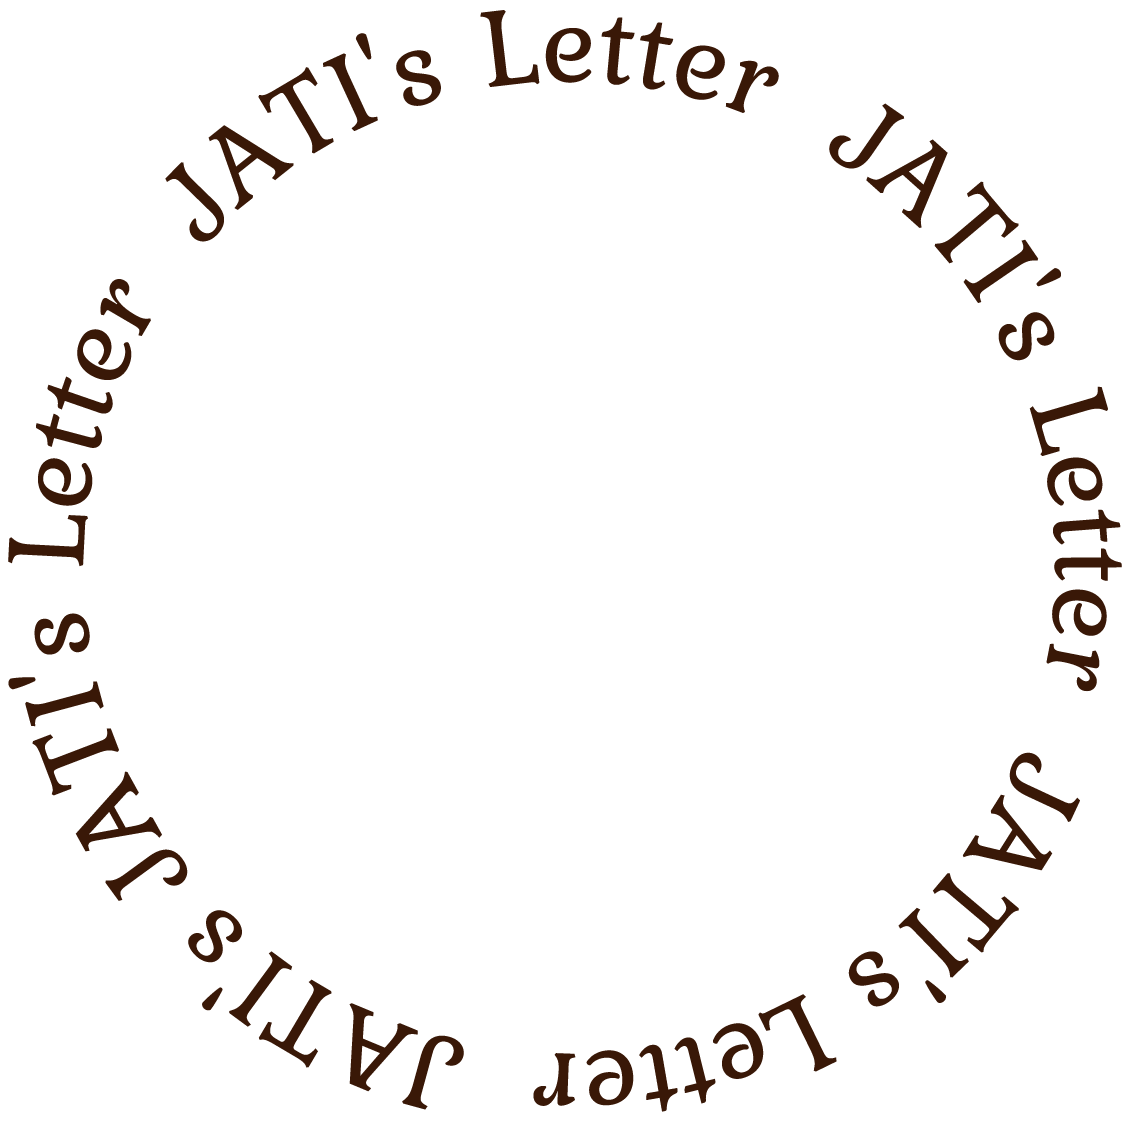 JATI's Letter